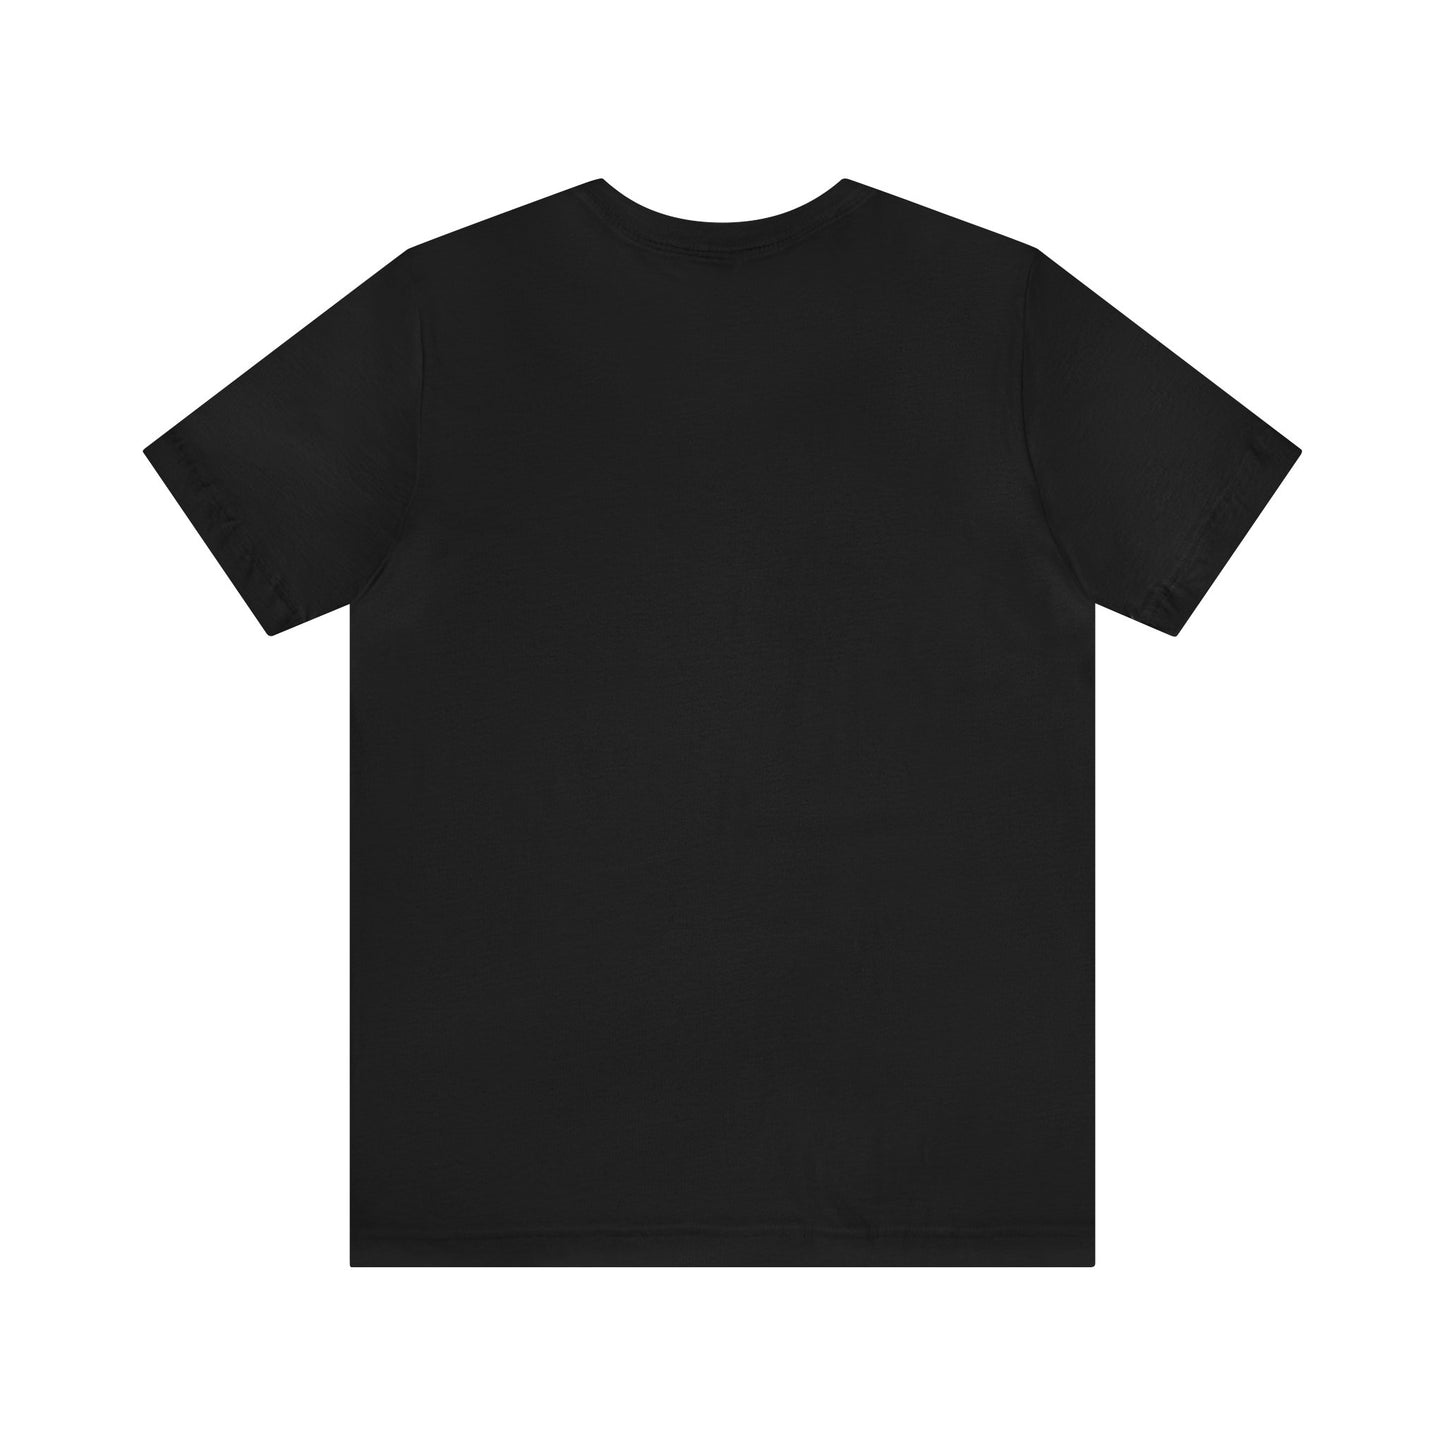 Pocket-Sized Adventure Rick T-Shirt, portal, merch, gift, top, buy online, shop, gift, rick, luna, moon, back